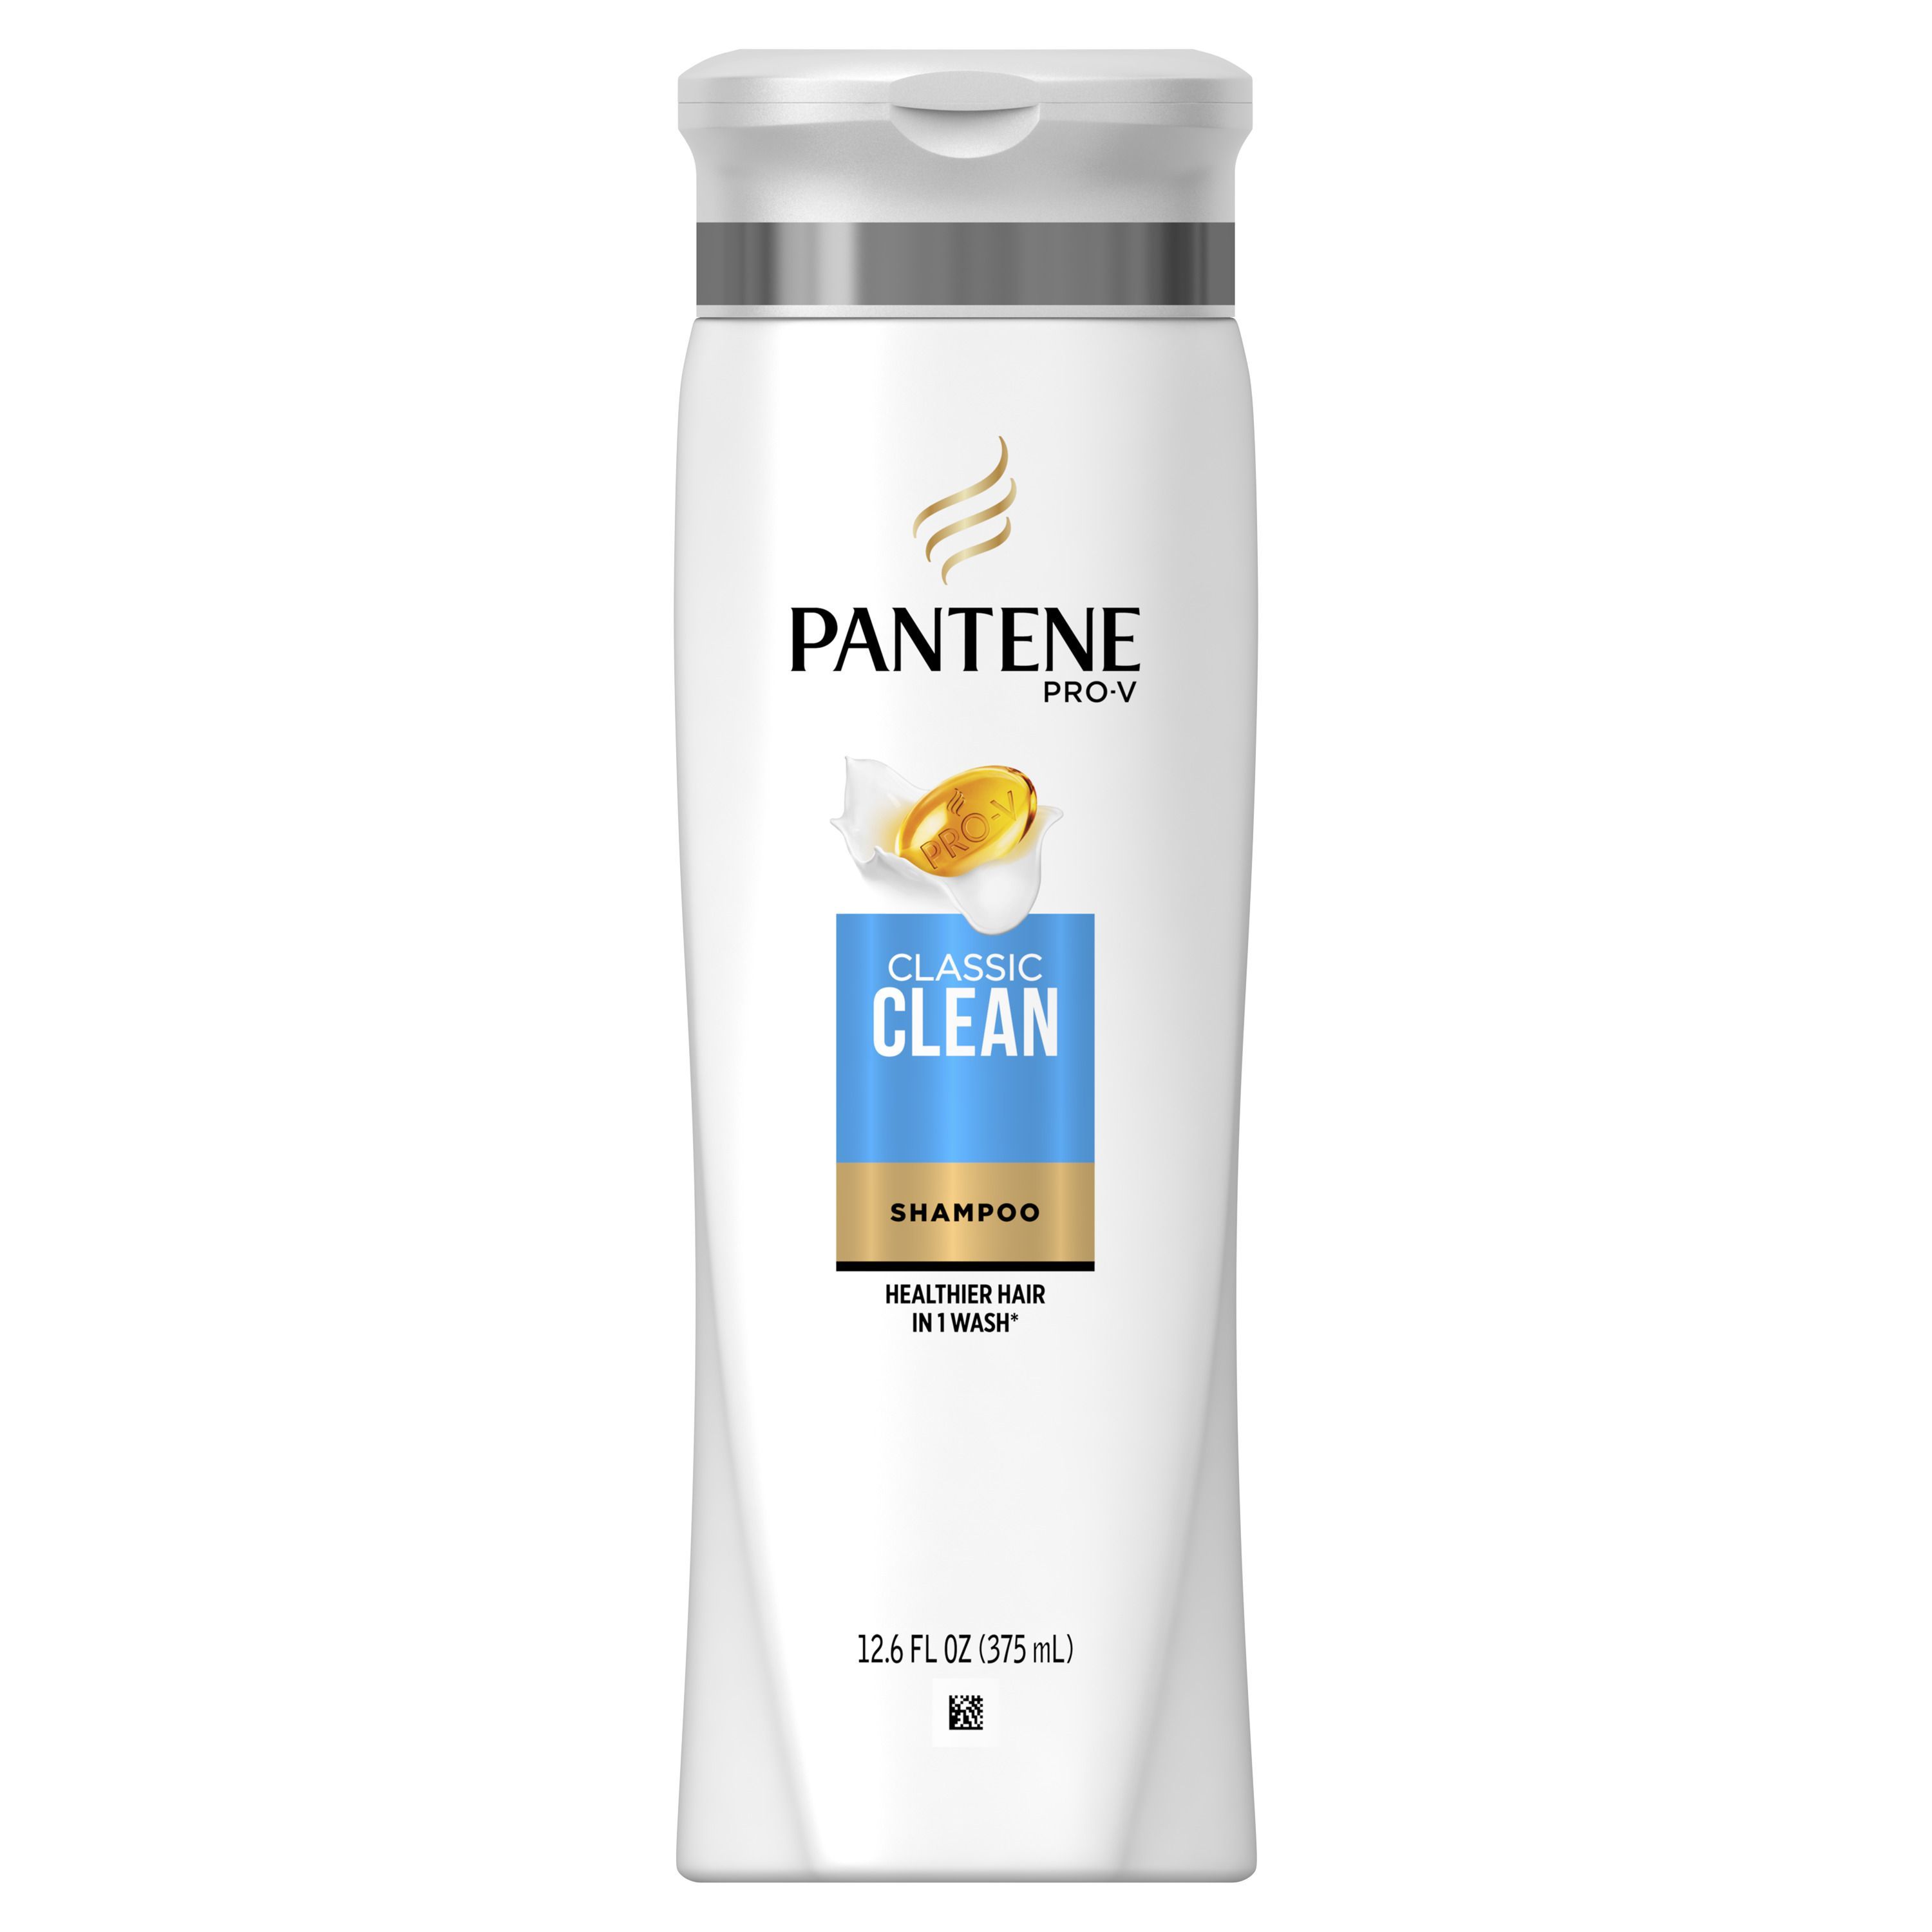 Pro-V Classic Clean Shampoo